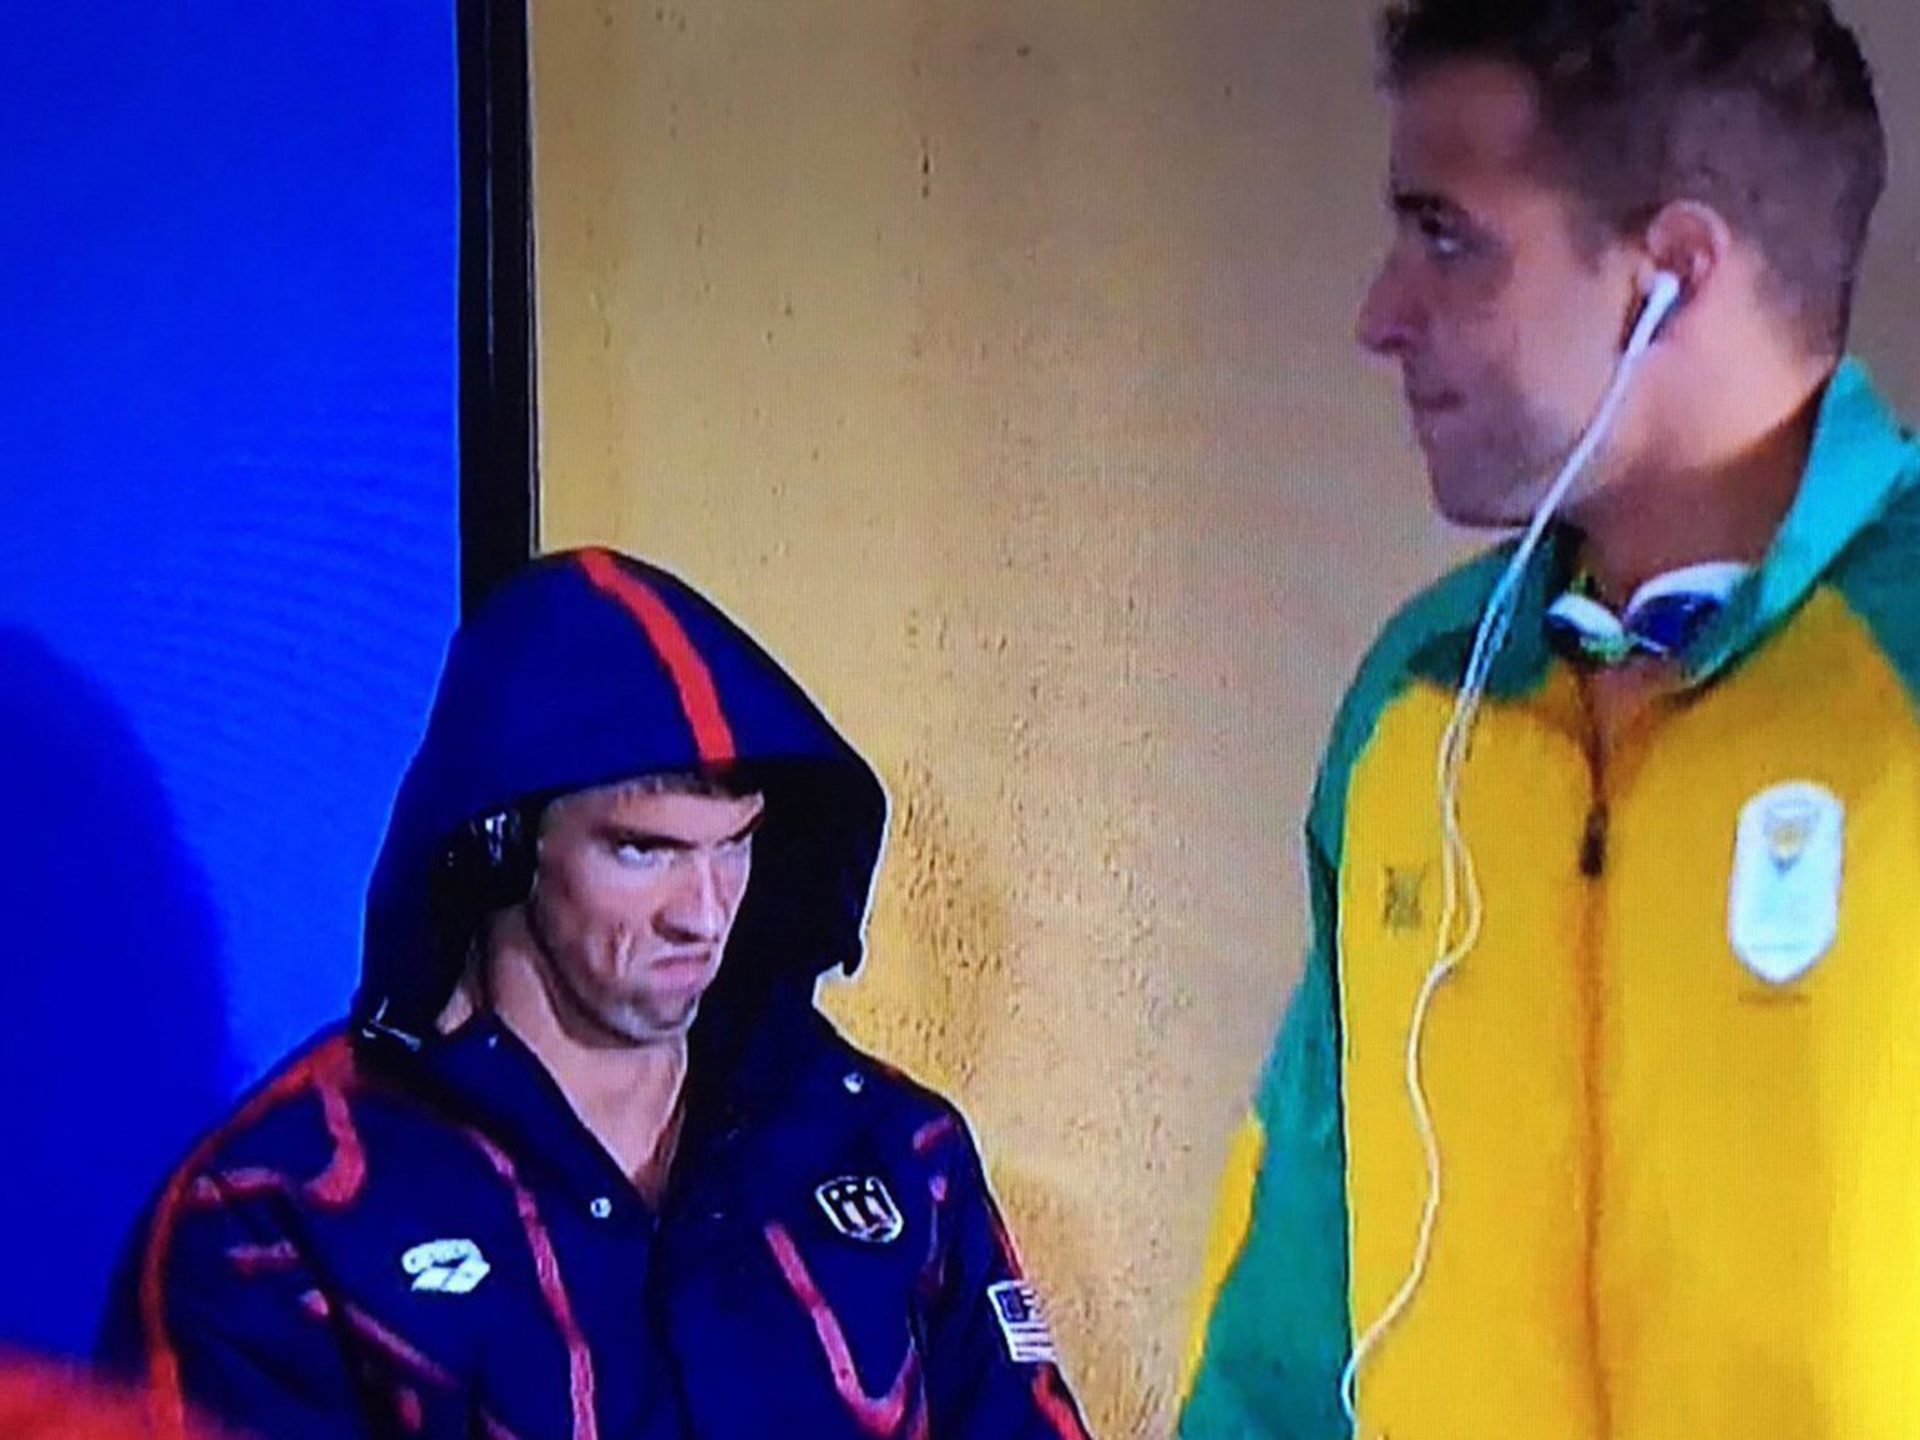 A culpa daquela cara de Phelps foi do Future